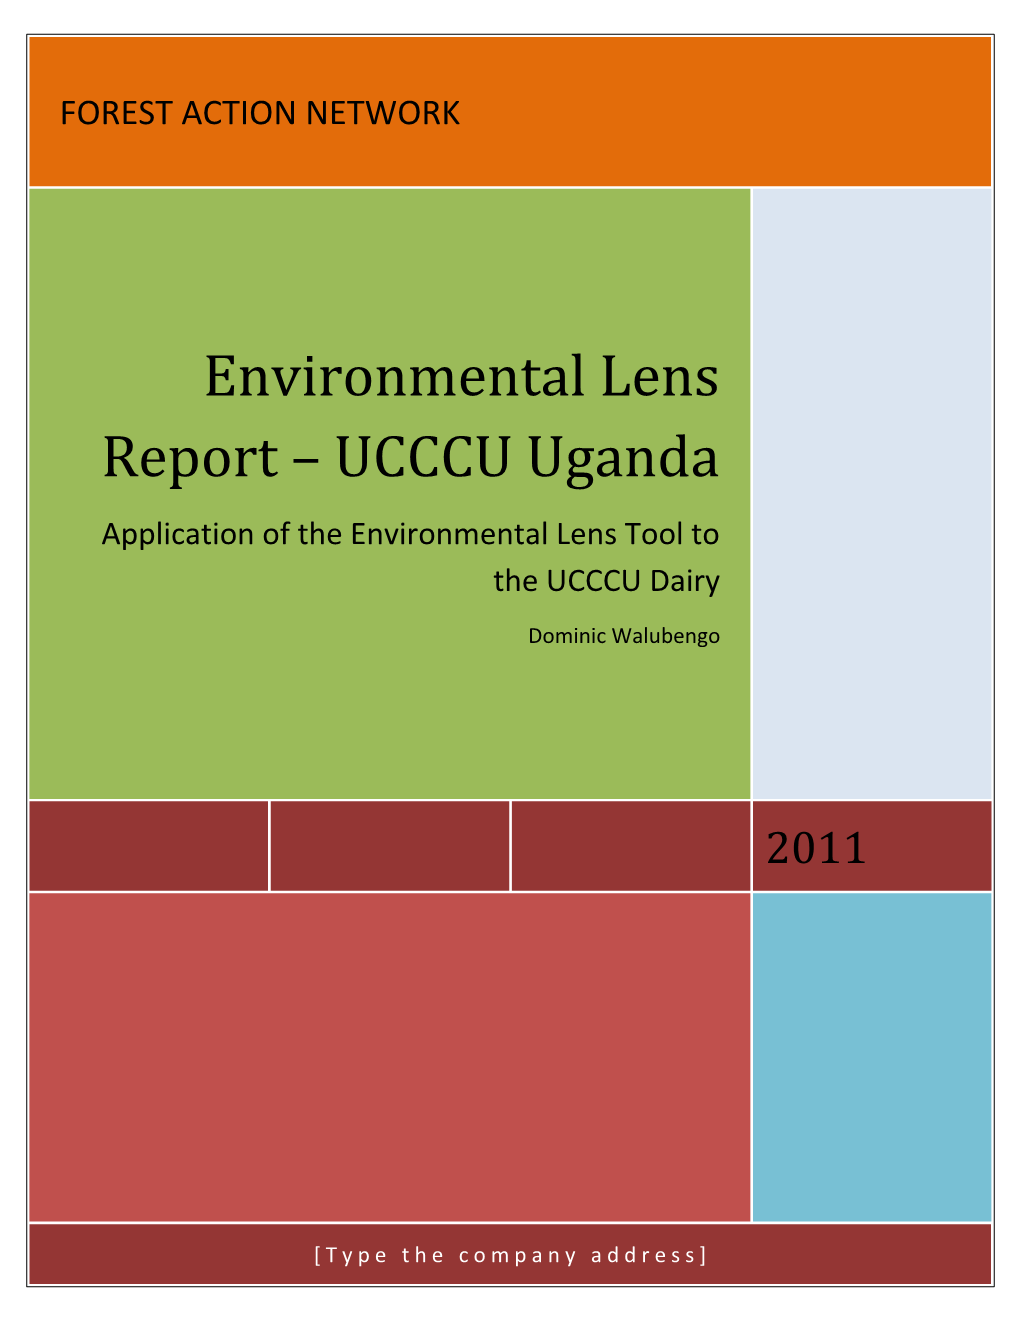 Environmental Lens Report UCCCU Uganda